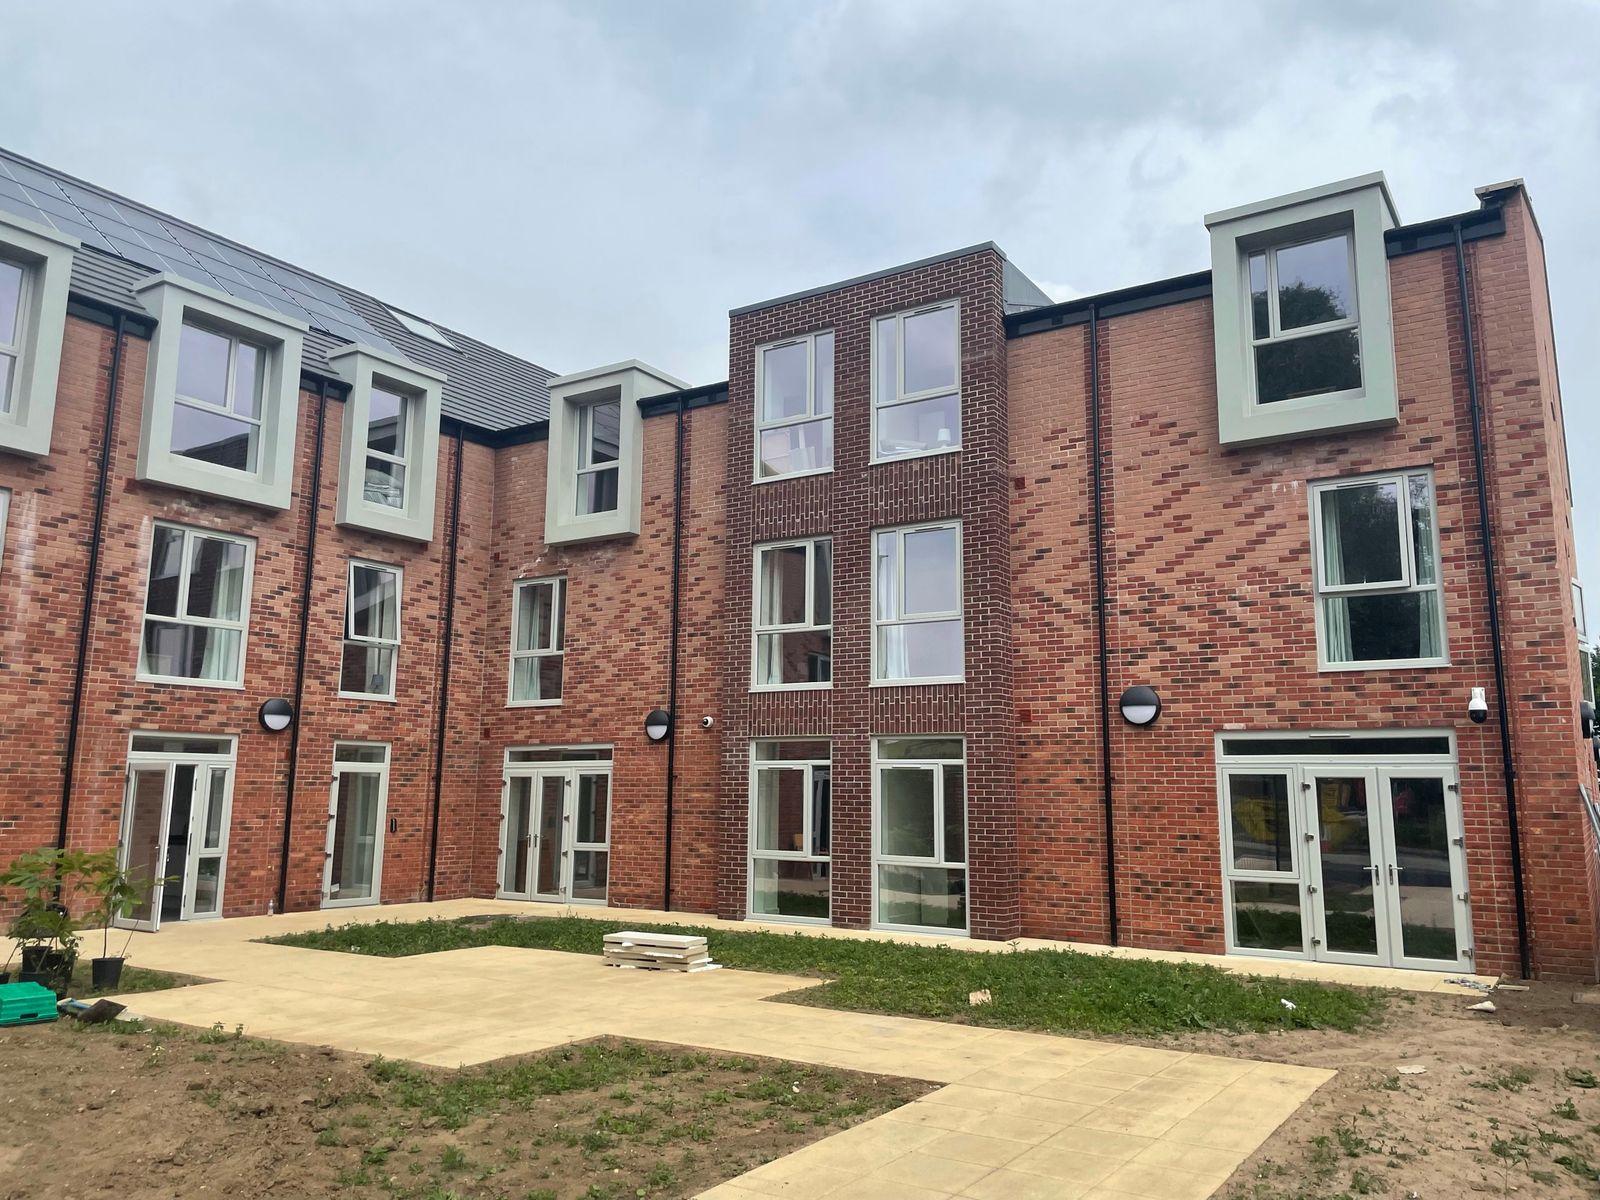 Work completes on pioneering new homes development in Leeds